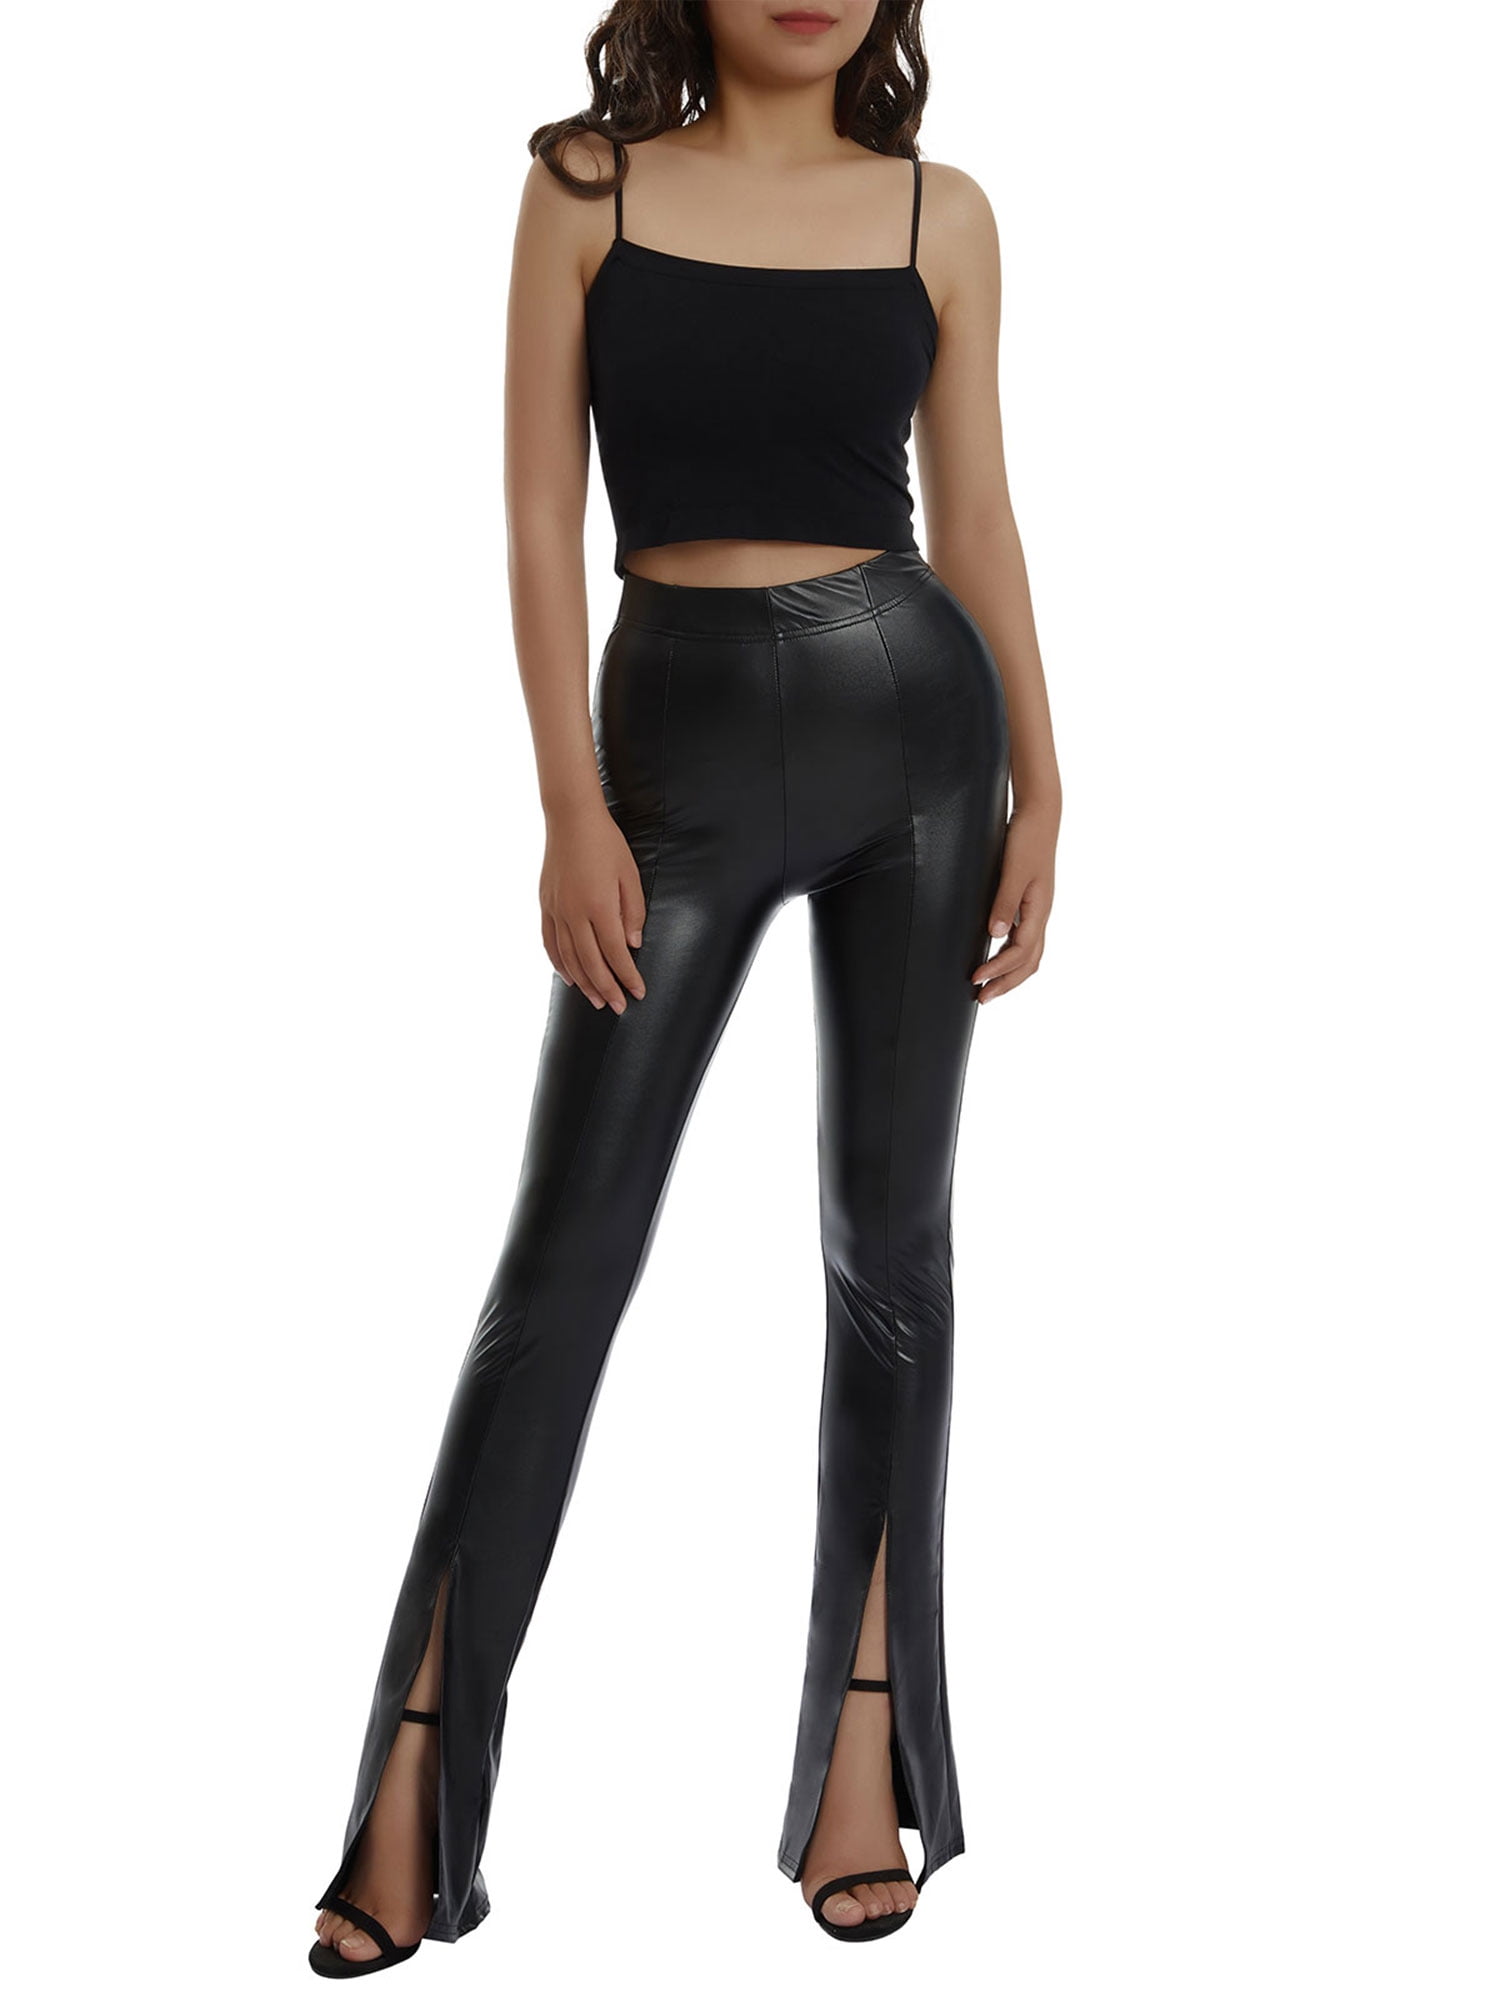 Womens Metallic Shiny Stretch Leggings Elastic High Waist Skinny Leather PU  Pants Trousers Clubwear for Women 